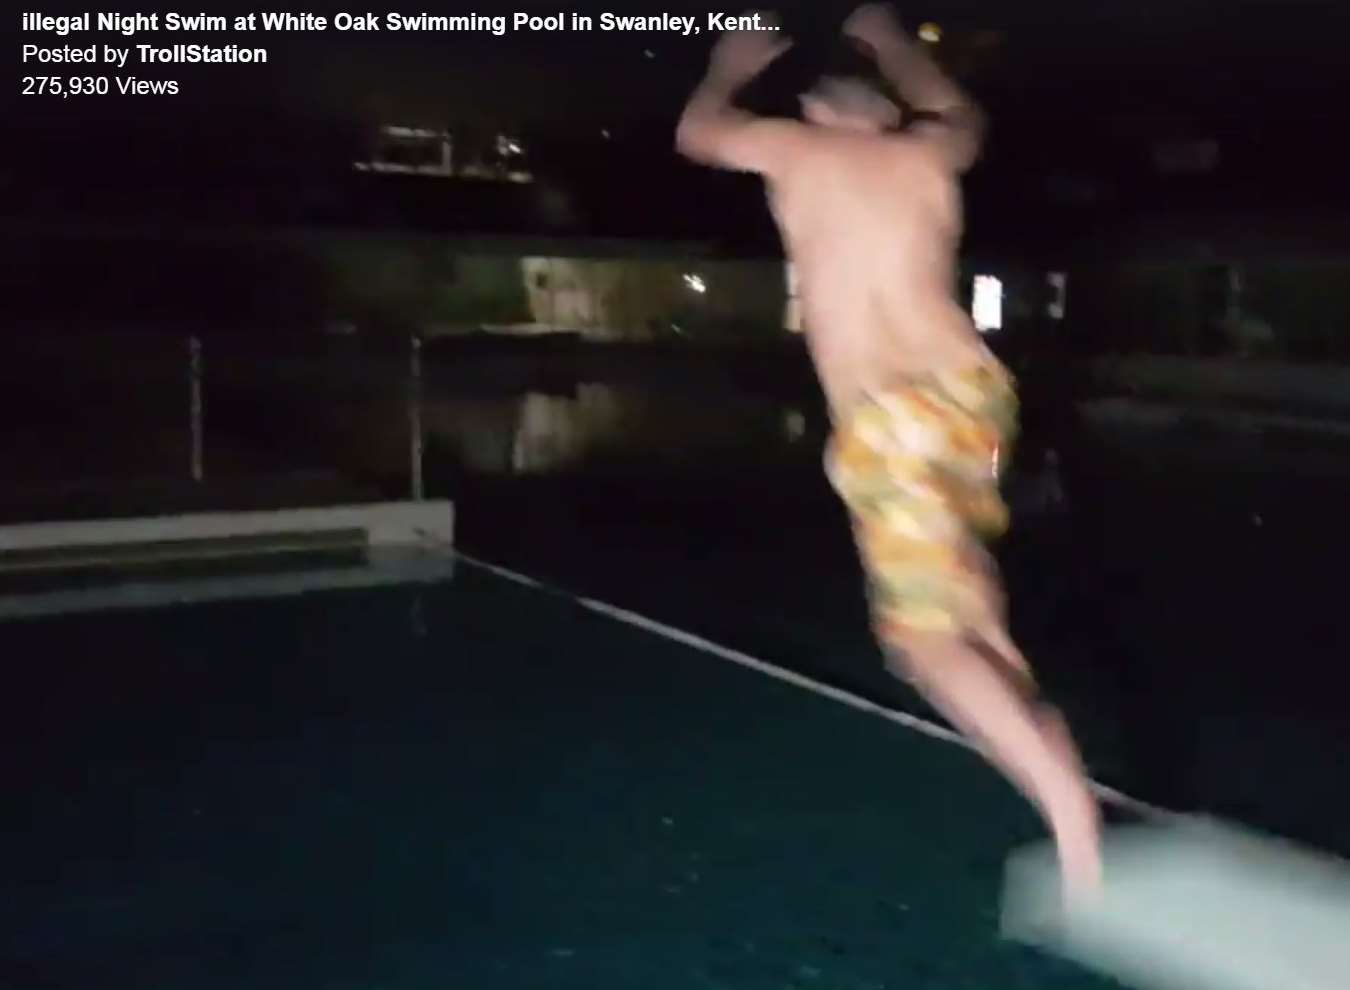 Daniel Jarvis on an illegal night swim at White Oak Swimming Pool